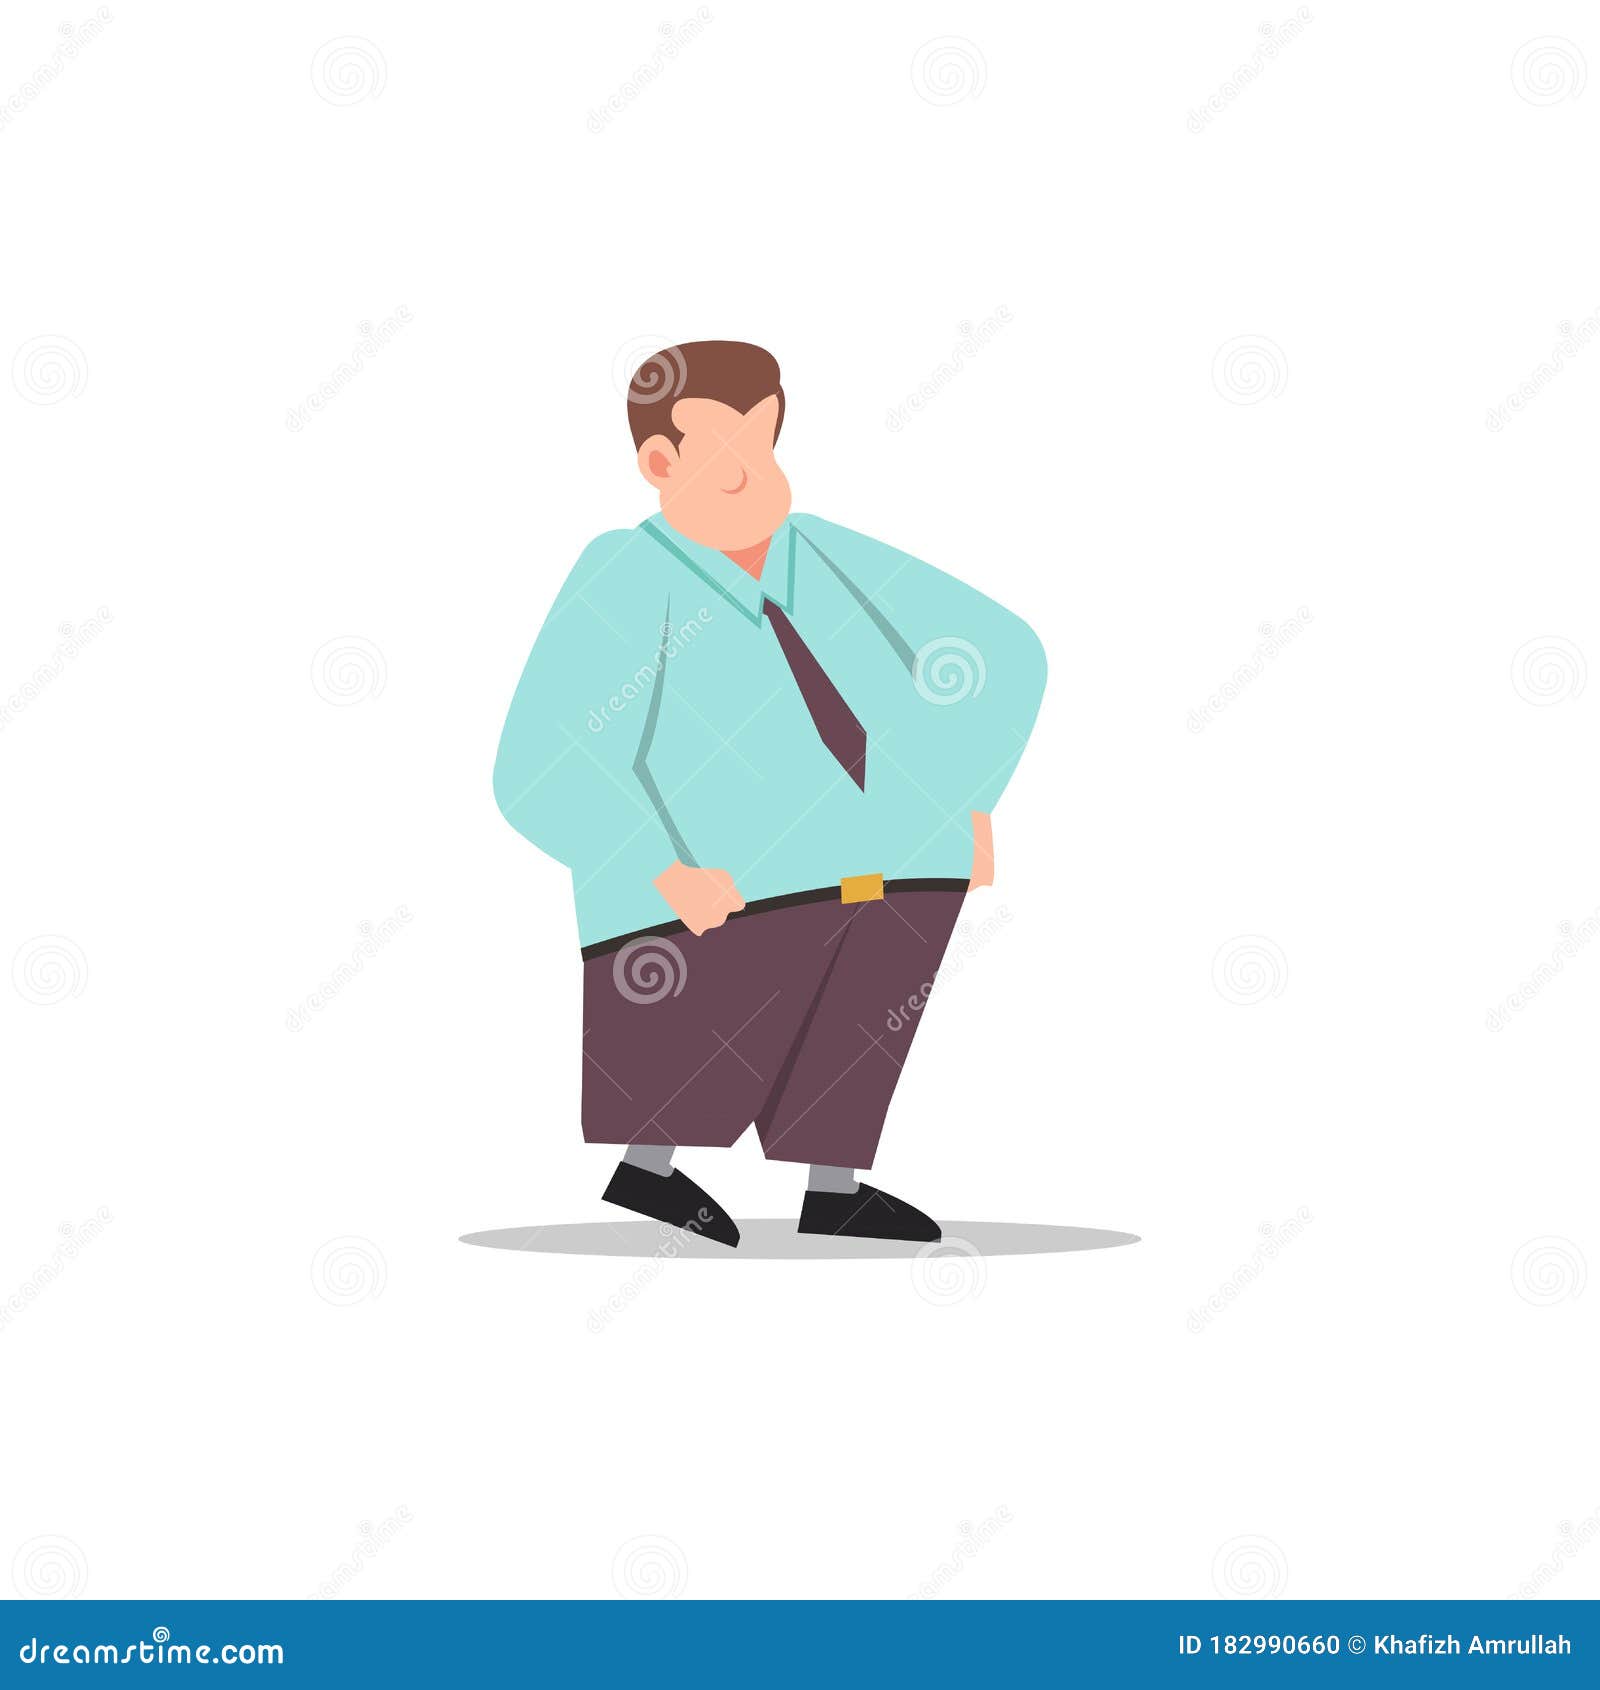 Cartoon Character Illustration Of Fat Businessman. Flat Avatar Icon ...